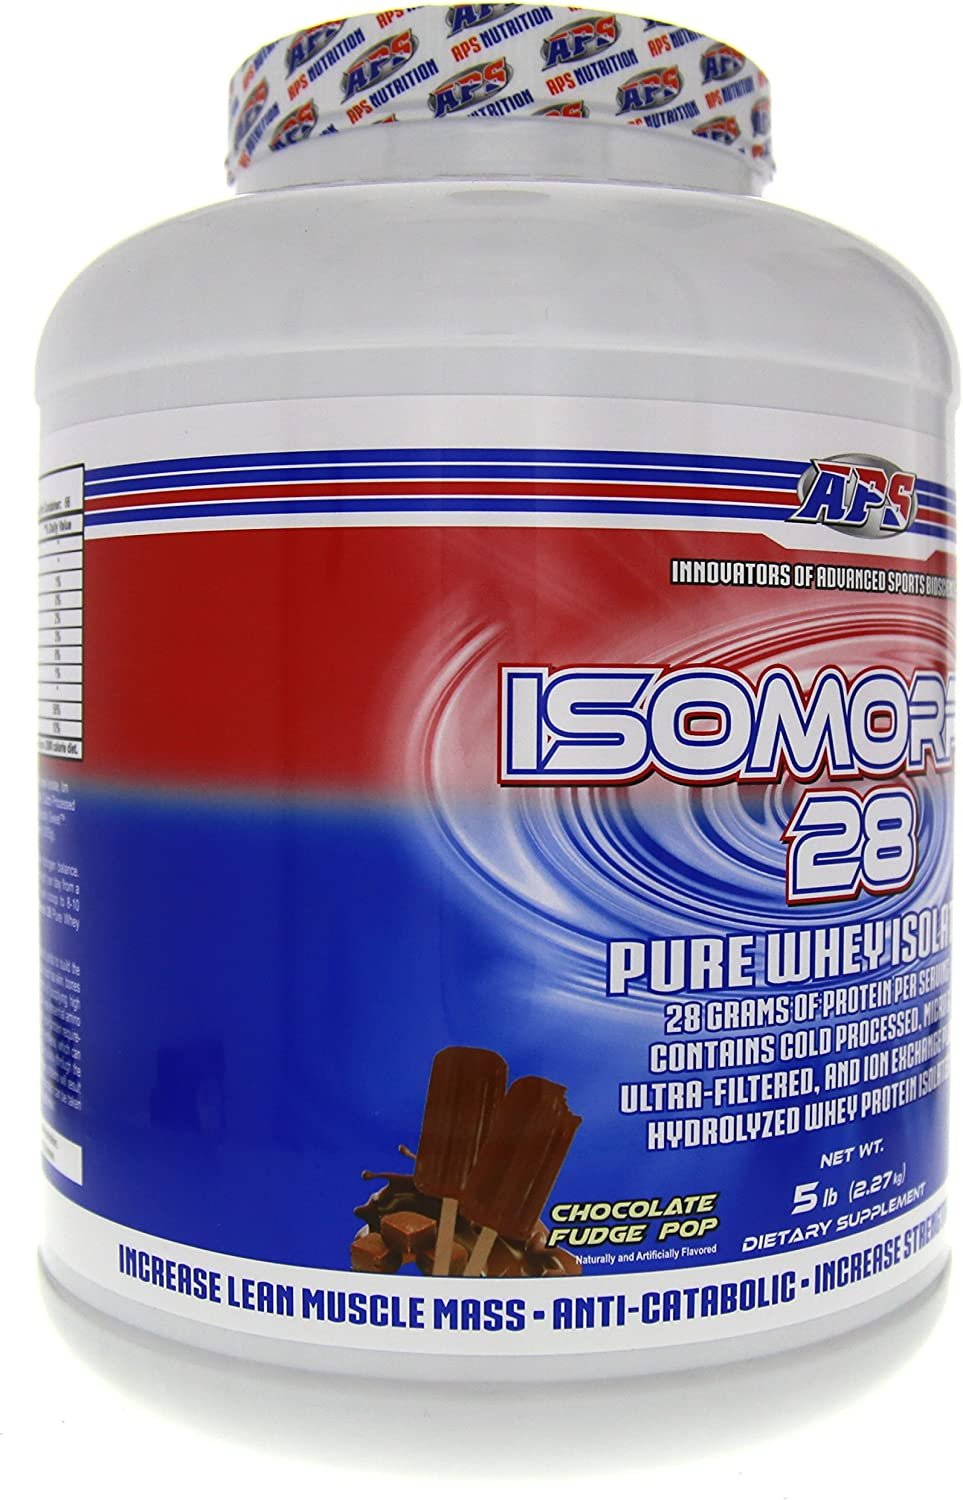 APS Nutrition Isomorph Whey Protein Isolate |Chocolate Fudge Pop | 5lb